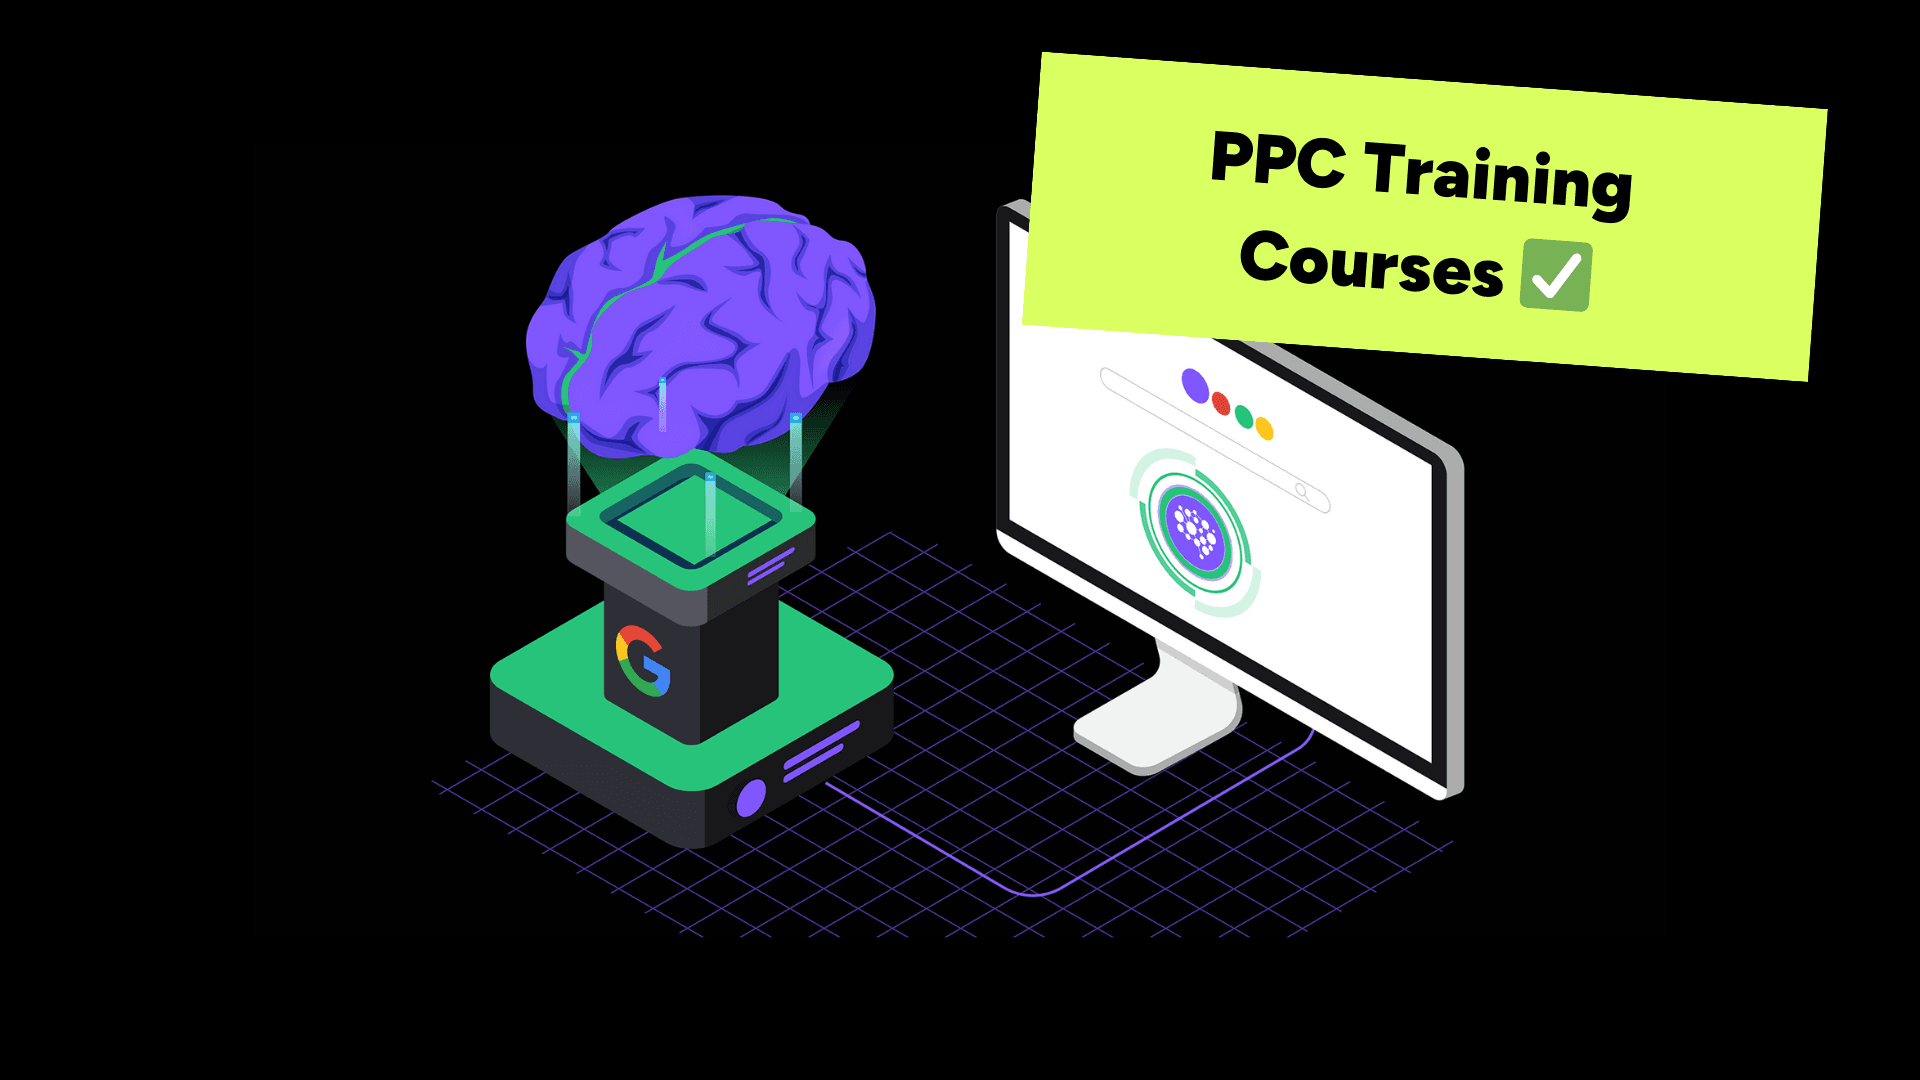 ppc training courses